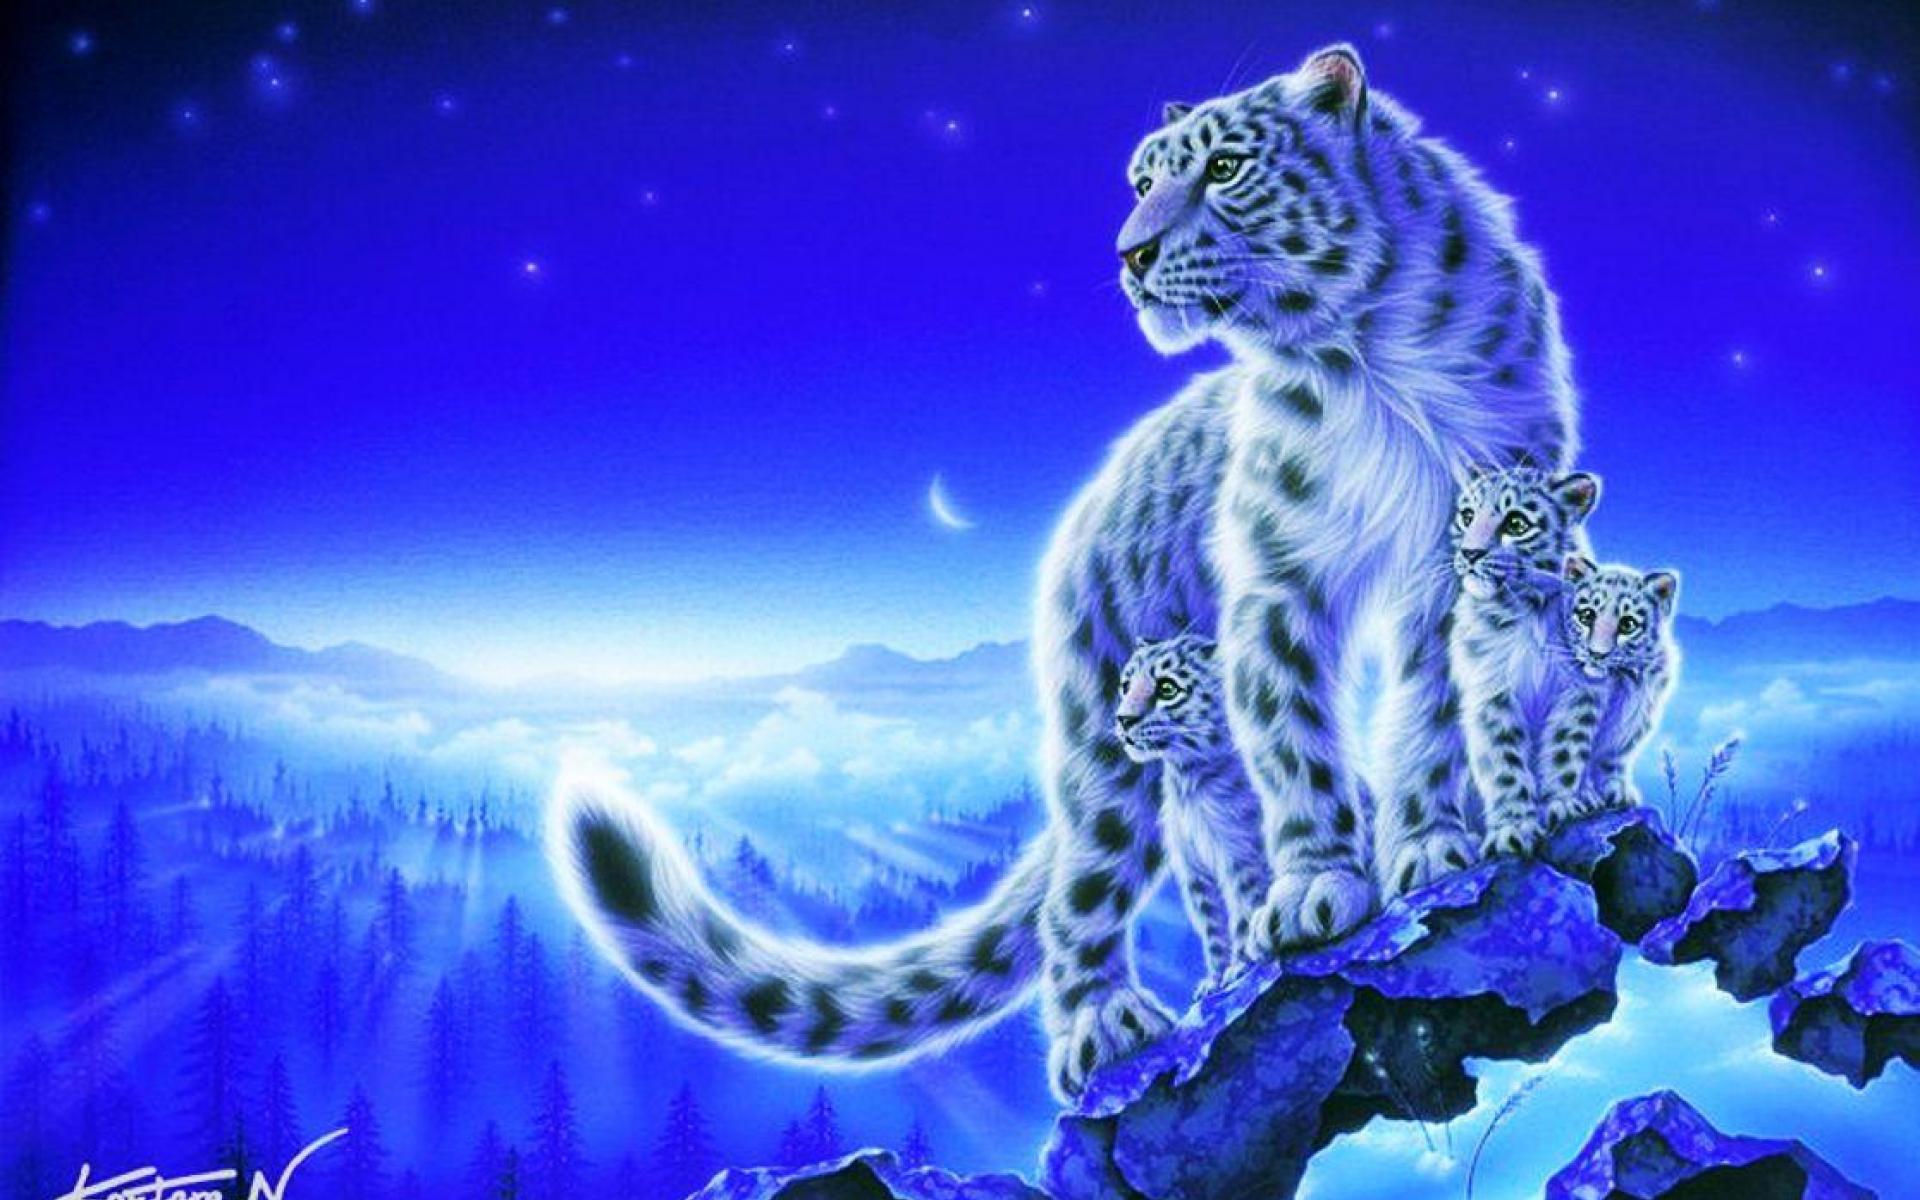 Blue Tiger Wallpaper Images  Free Download on Freepik